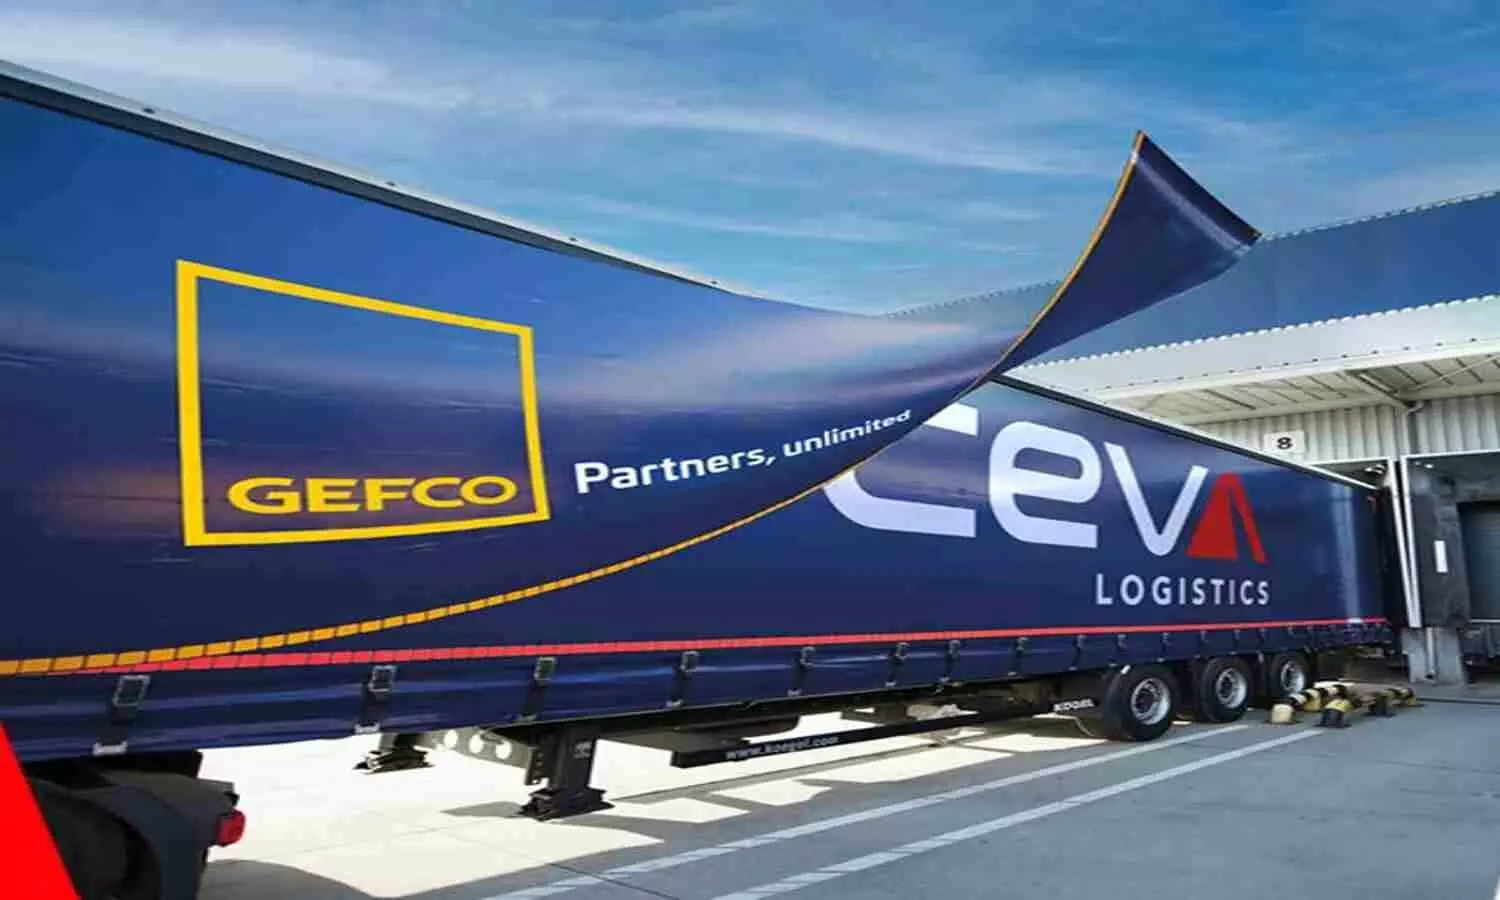 CEVA Logistics creates former GEFCO operation into Finished Vehicle organization